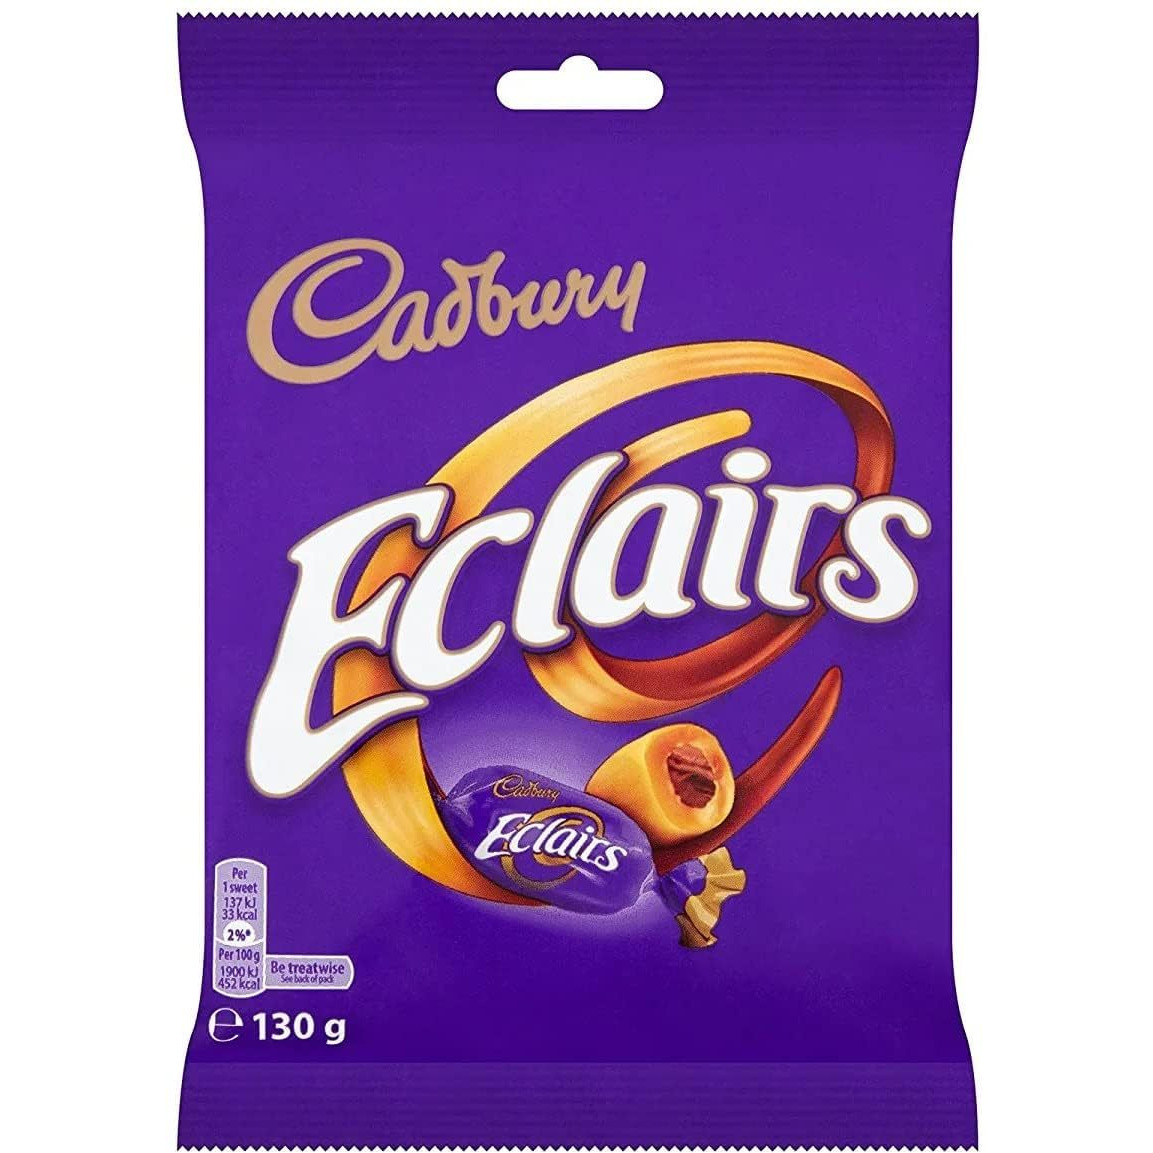 Cadbury Eclairs Chocolate Bag - 130 Gm (4.59 Oz)